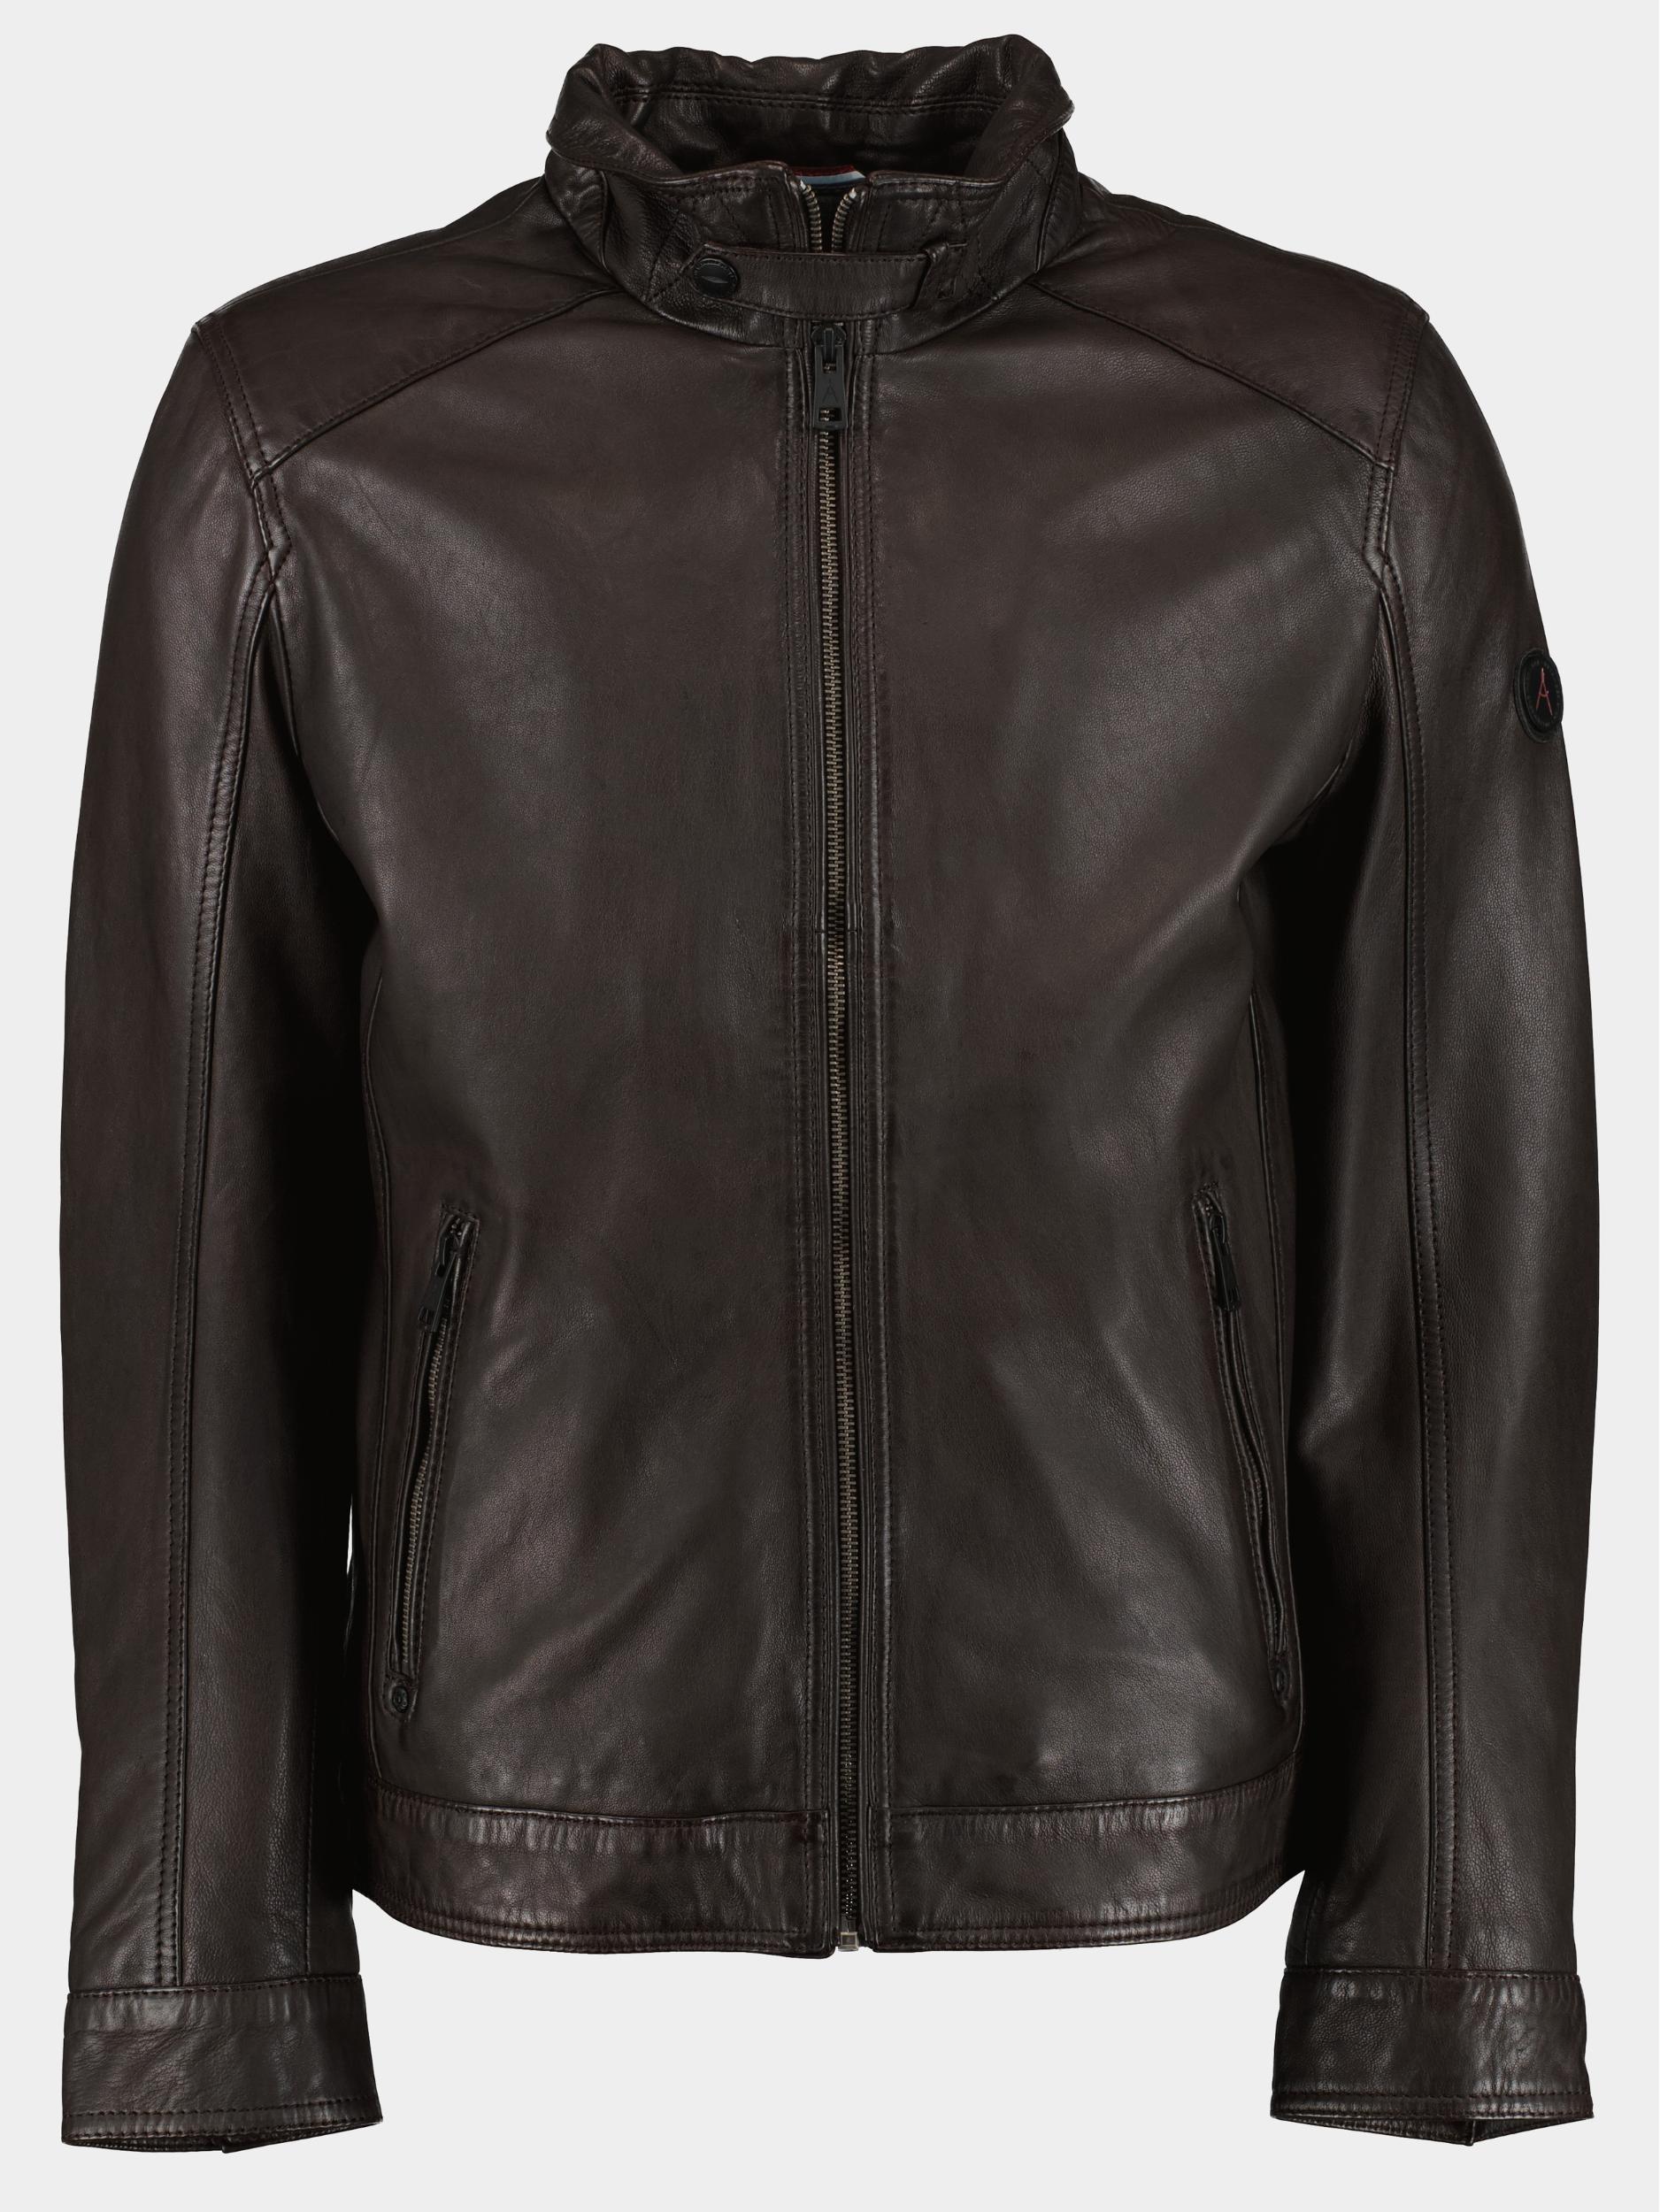 Afbeelding van DNR Lederen jack leather jacket 52318/599